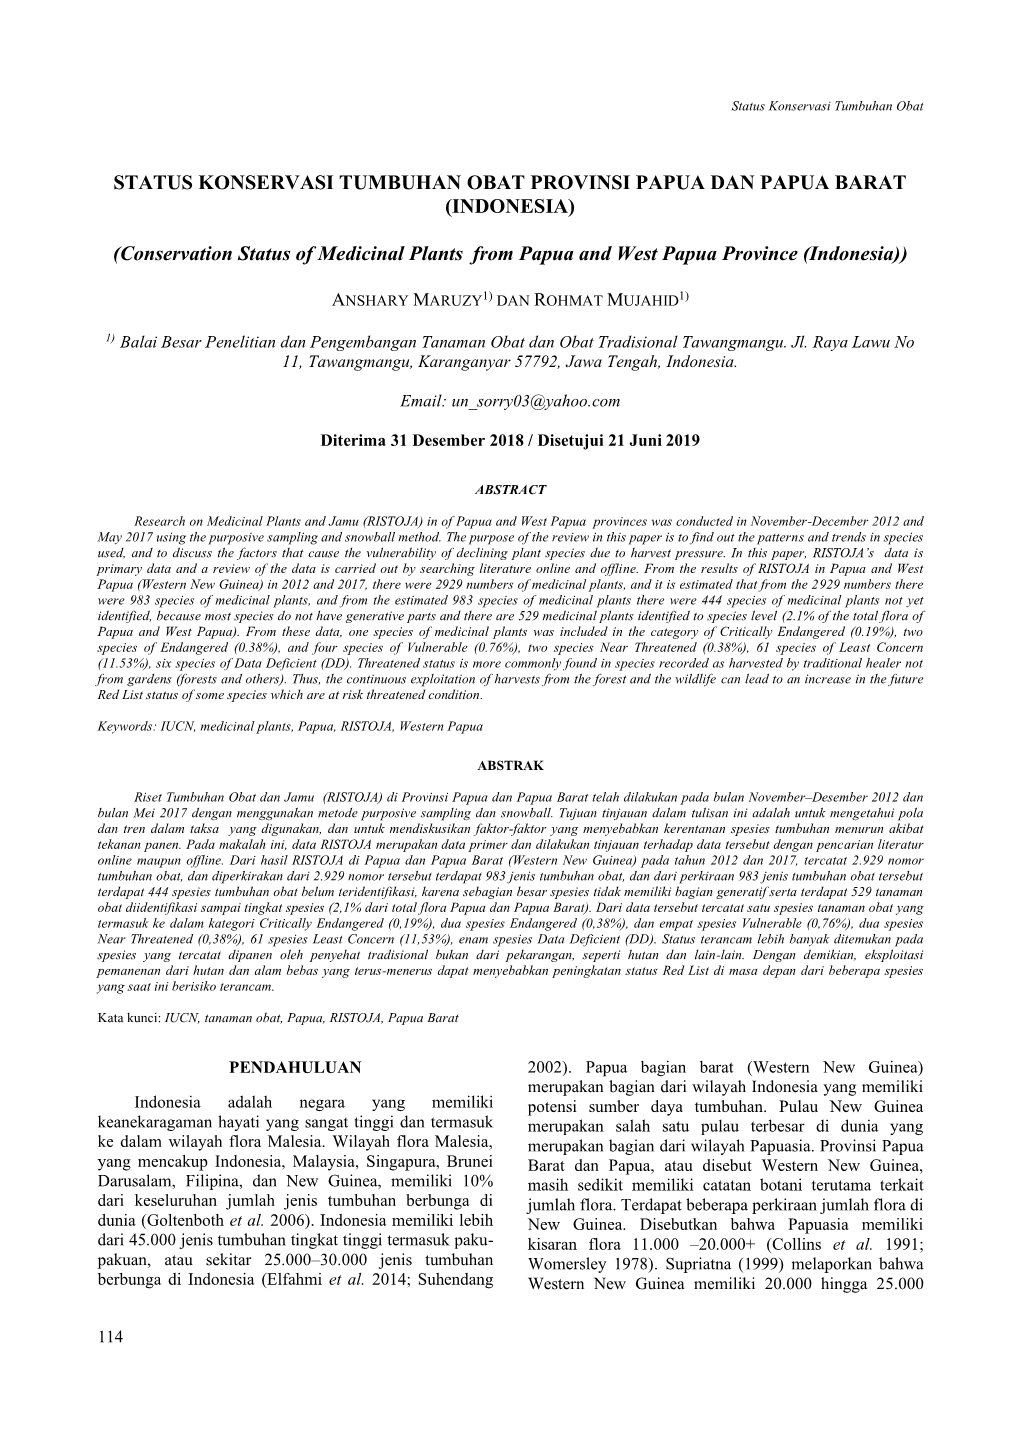 Status Konservasi Tumbuhan Obat Provinsi Papua Dan Papua Barat (Indonesia)